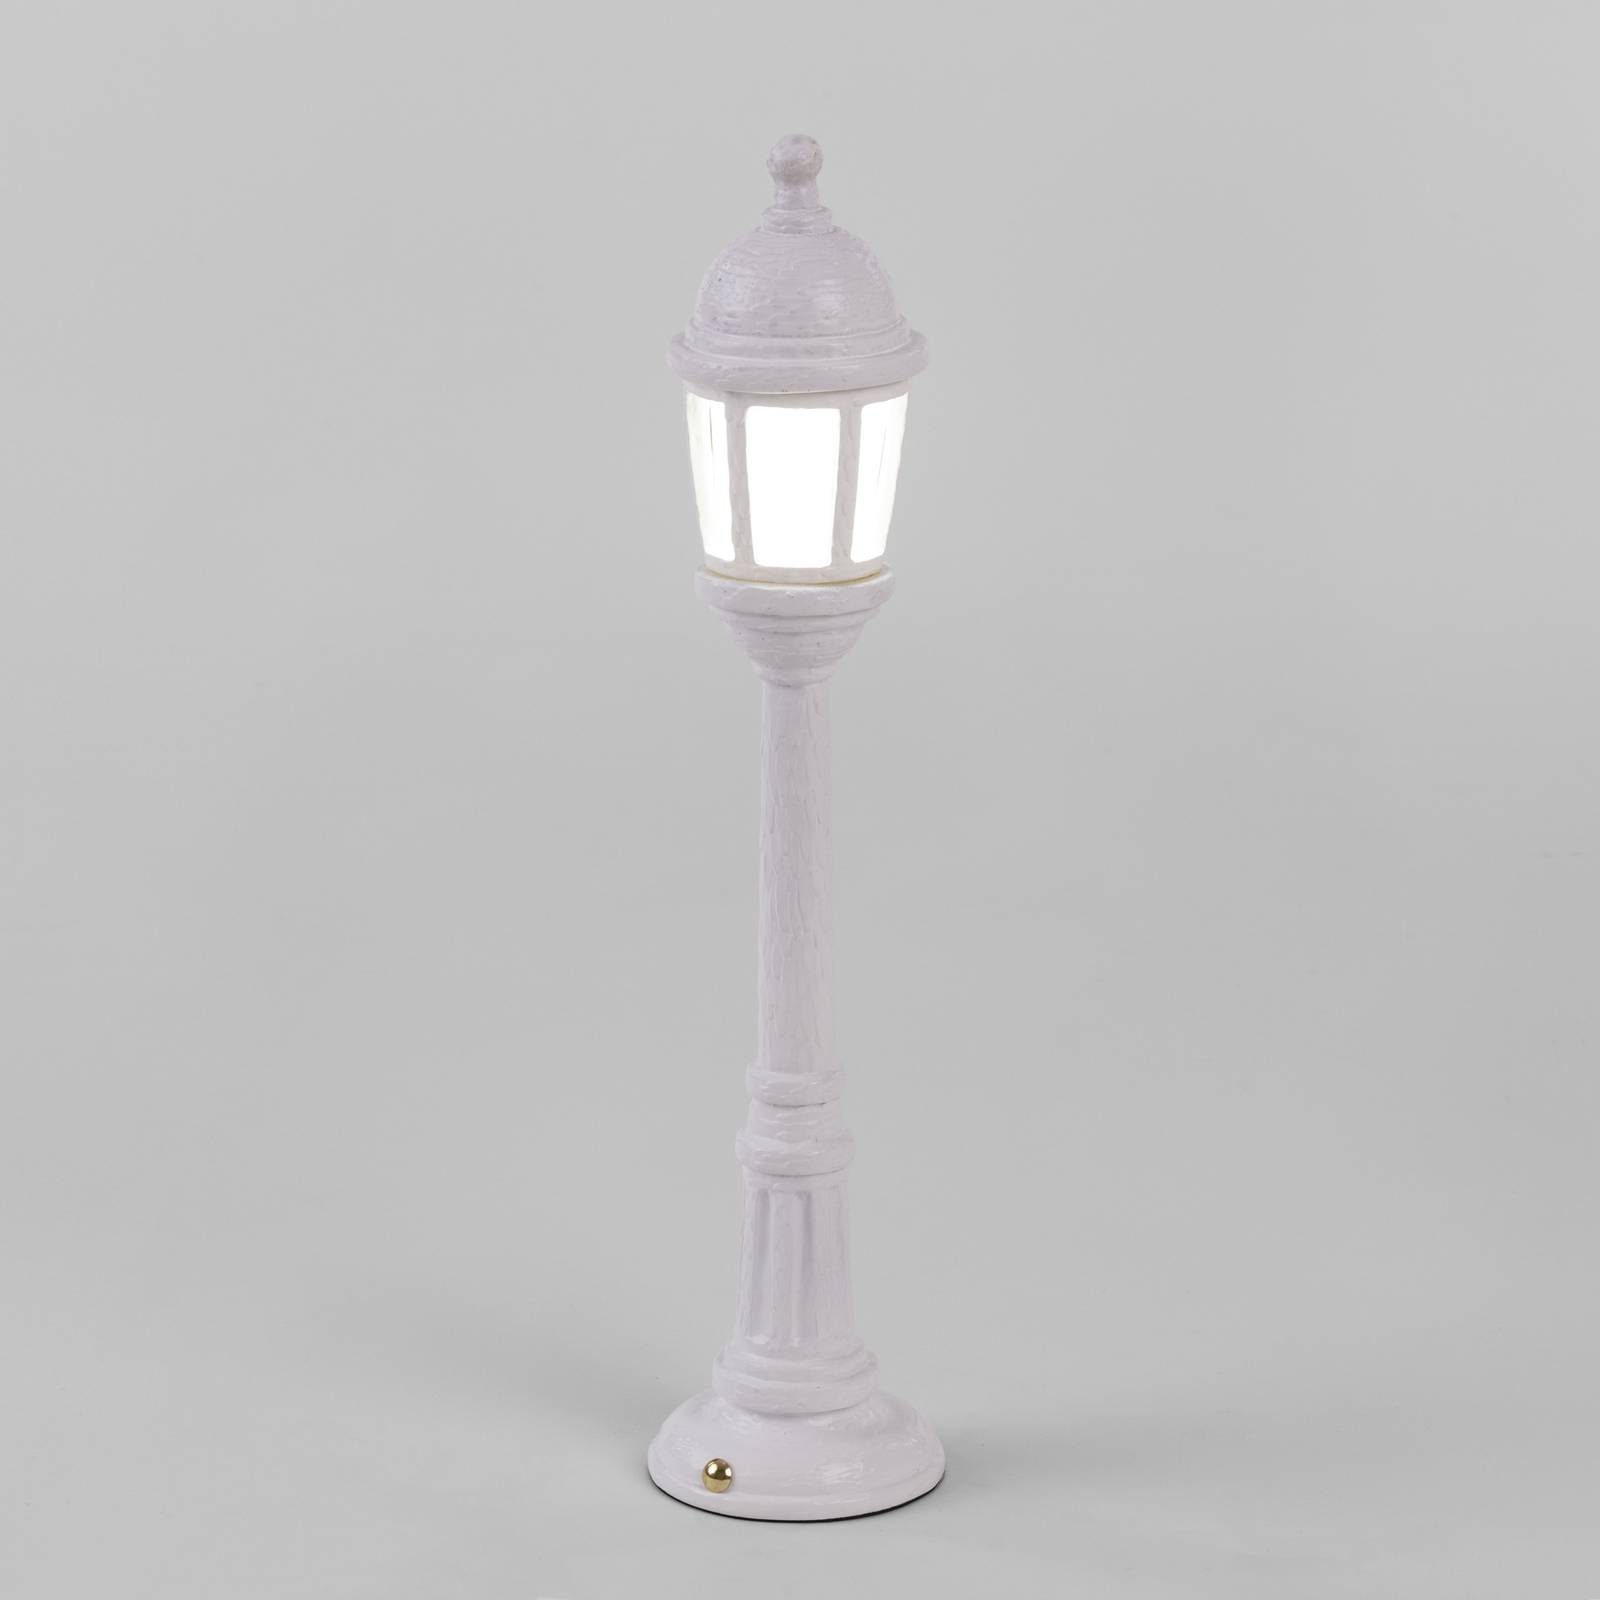 Image of SELETTI Lampe déco LED Street Lamp avec batterie, blanche 8008215147017